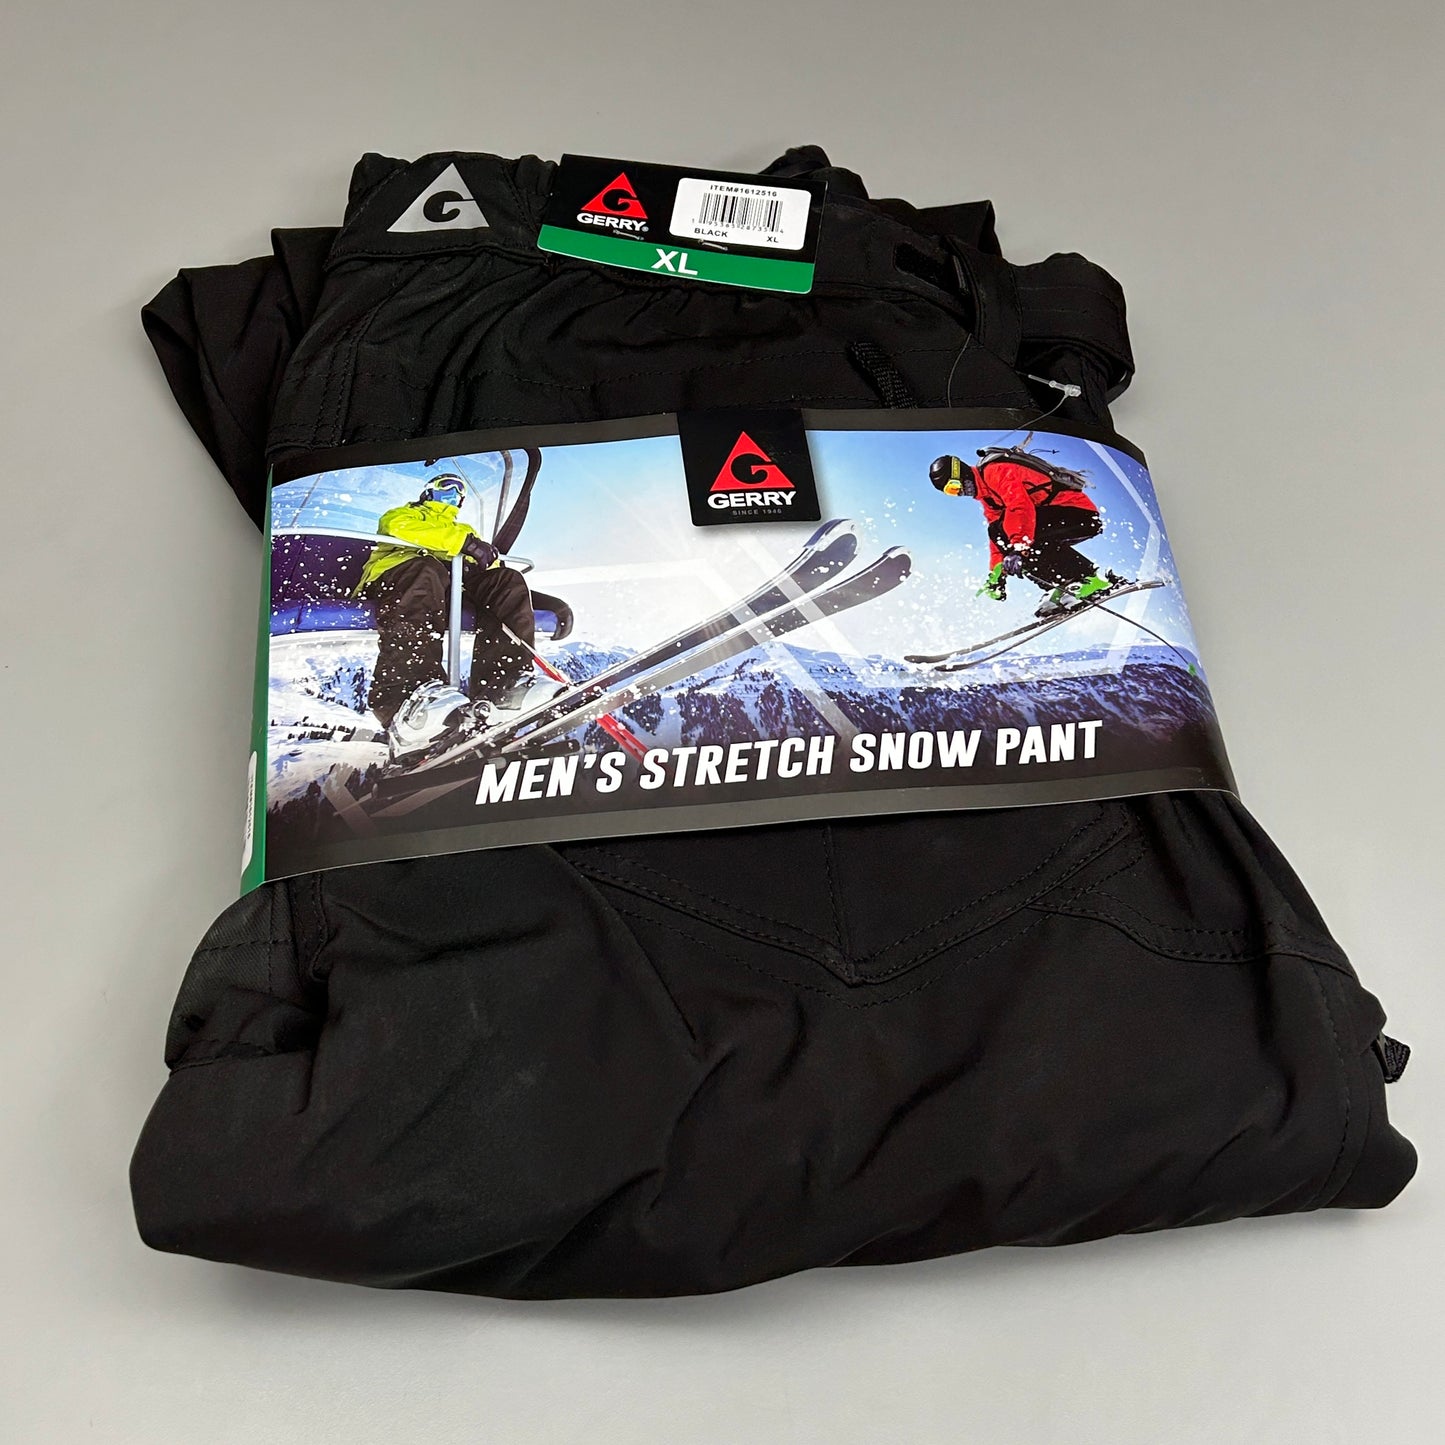 GERRY Men's 4-Way Stretch Snow Pant Black Sz X-Large (New)